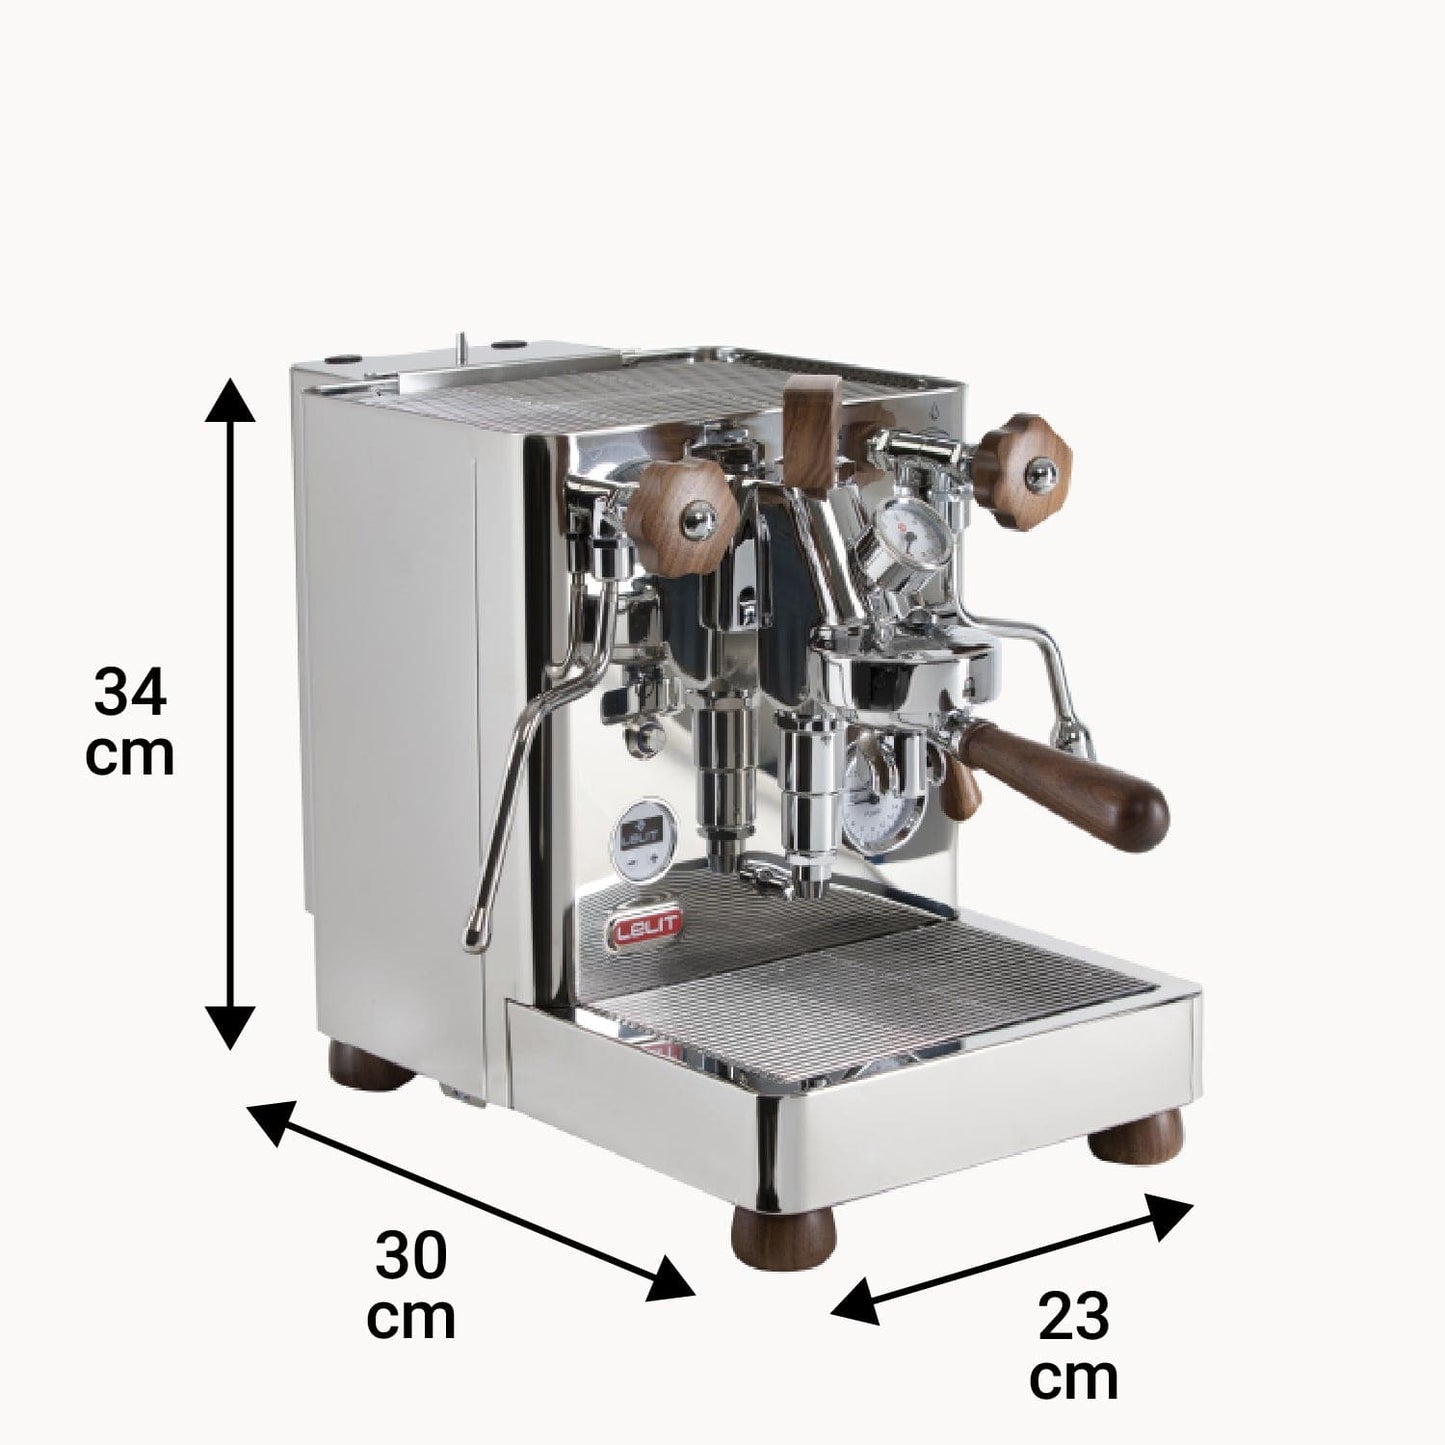 Lelit Home Coffee Machines Lelit Bianca Coffee Machine & espresso Machine Silver, 220V, PL162T | The New Bianca V3